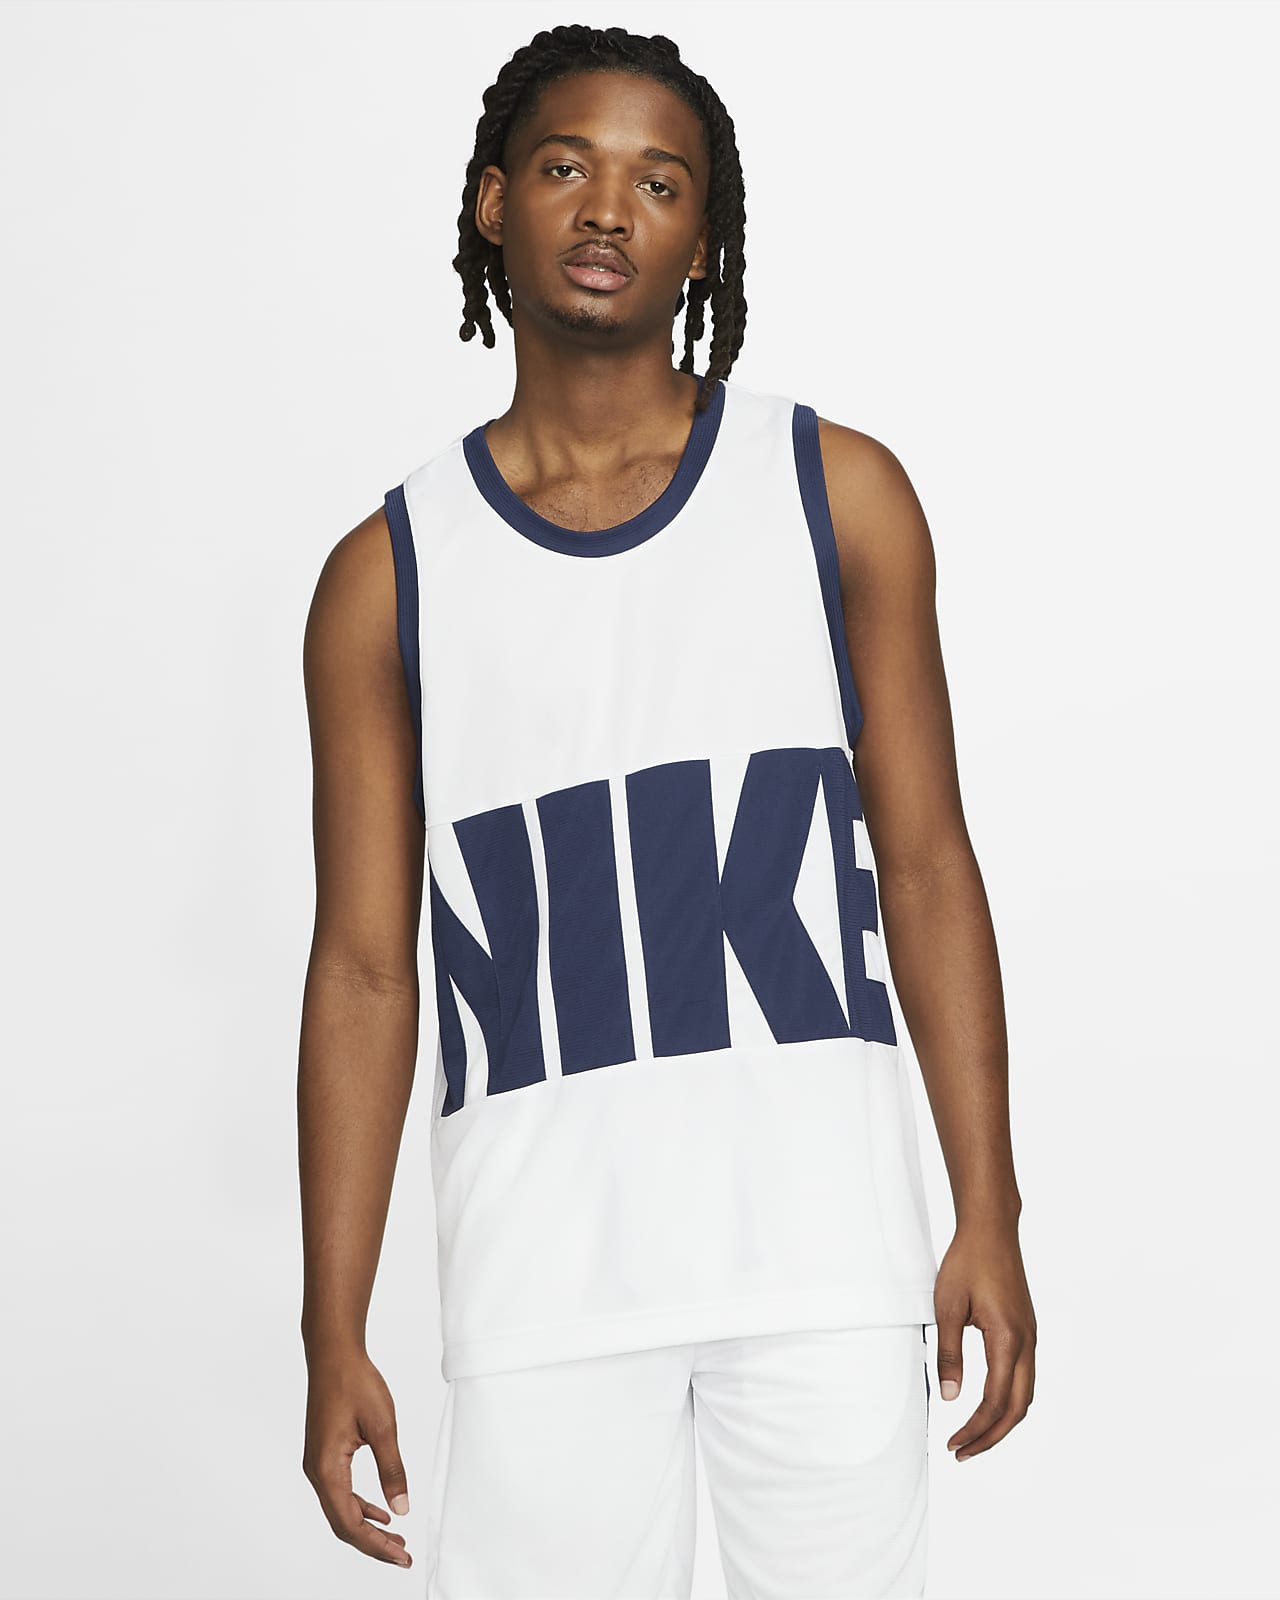 Nike Dri-FIT Men's Basketball Jersey 